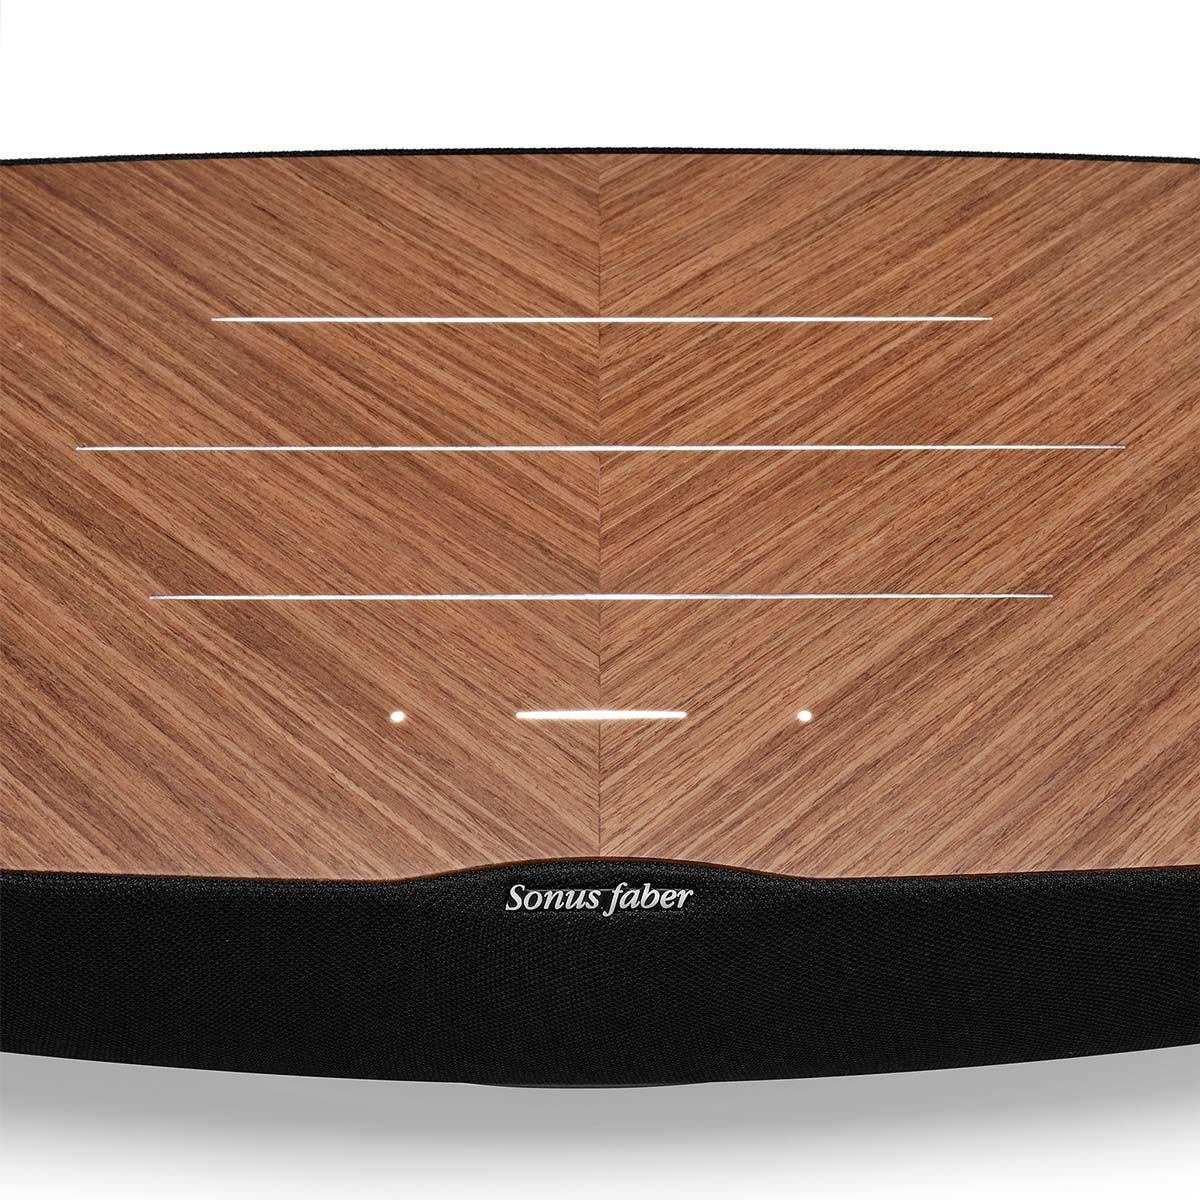 Sonus Faber Omnia Wireless Smart Speaker, Walnut, top panel detailed view